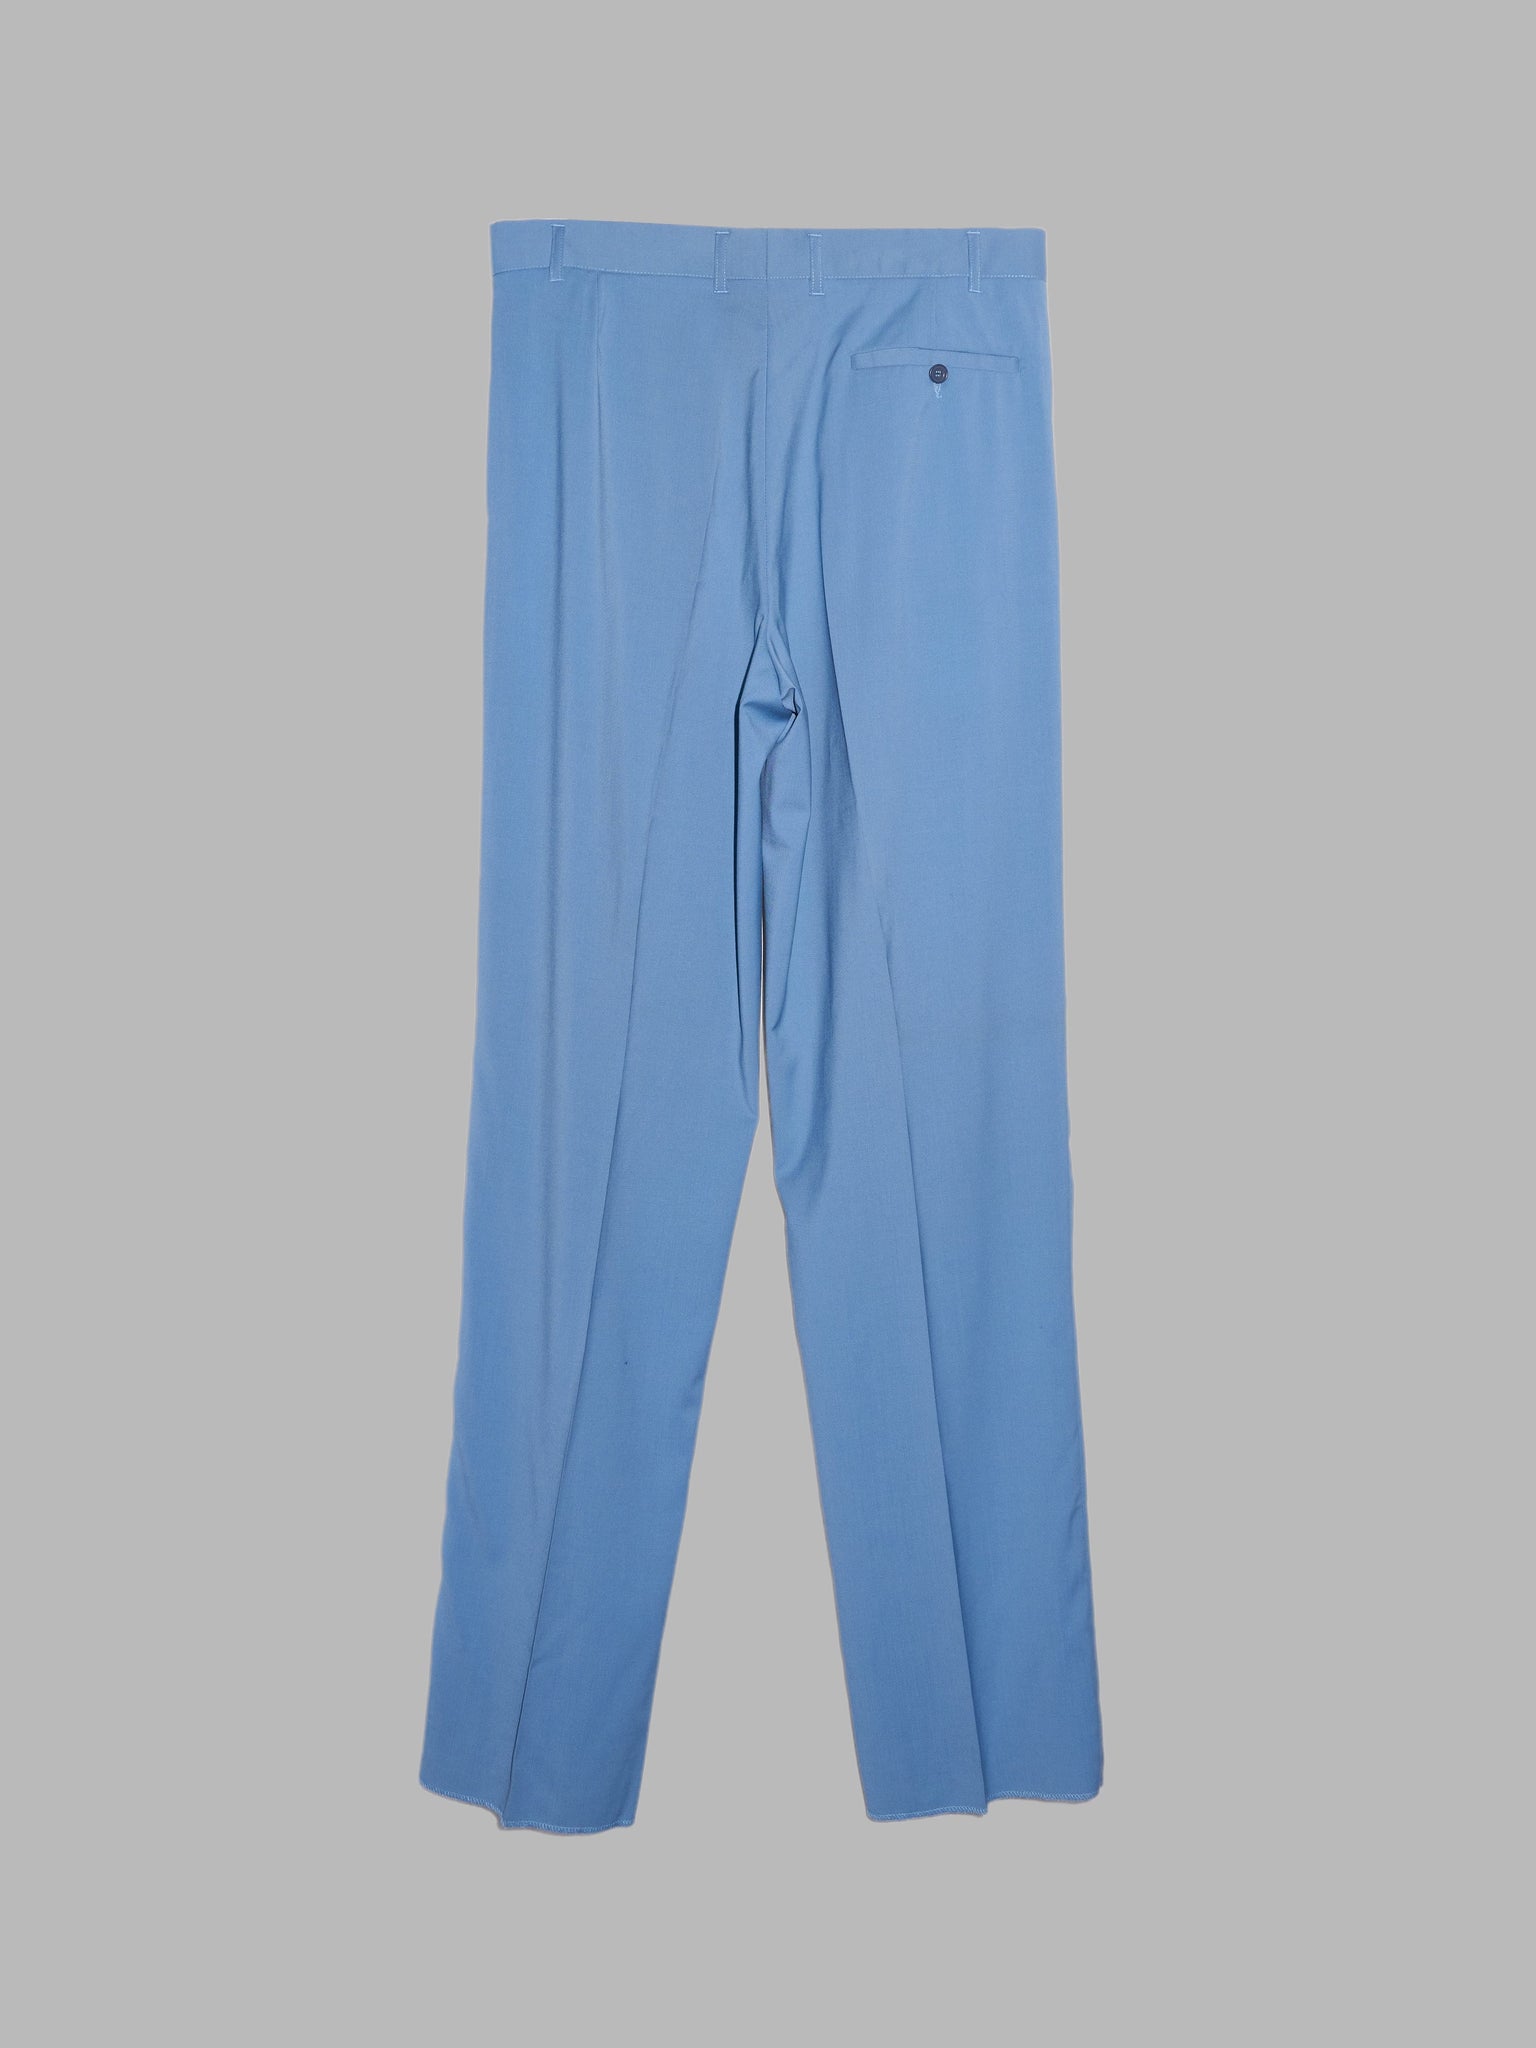 Byblos 1990s blue wool pleated trousers - size 52 new deadstock unhemmed